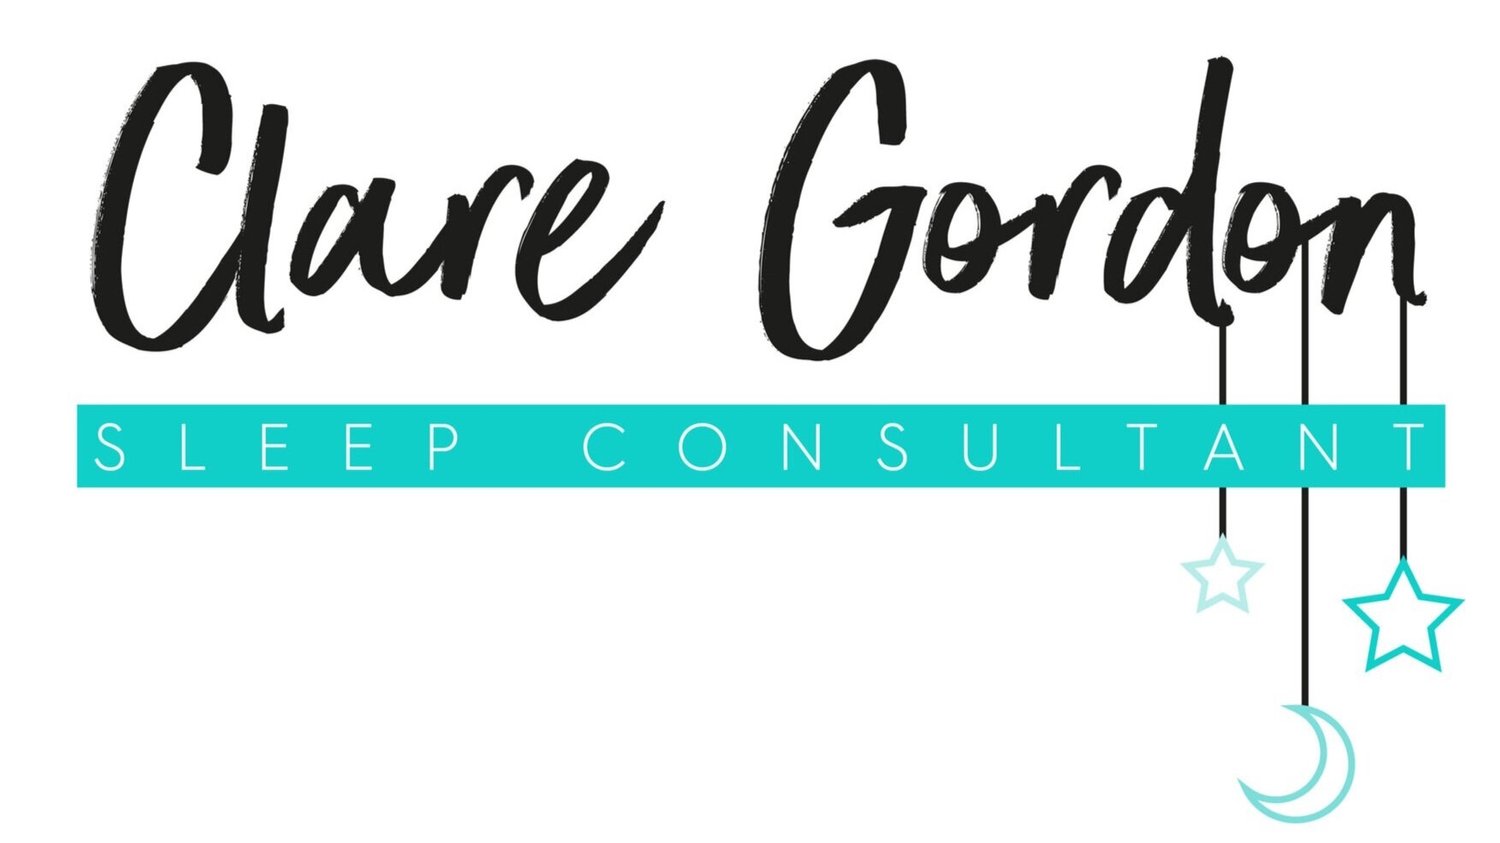 Clare Gordon Sleep Consultant